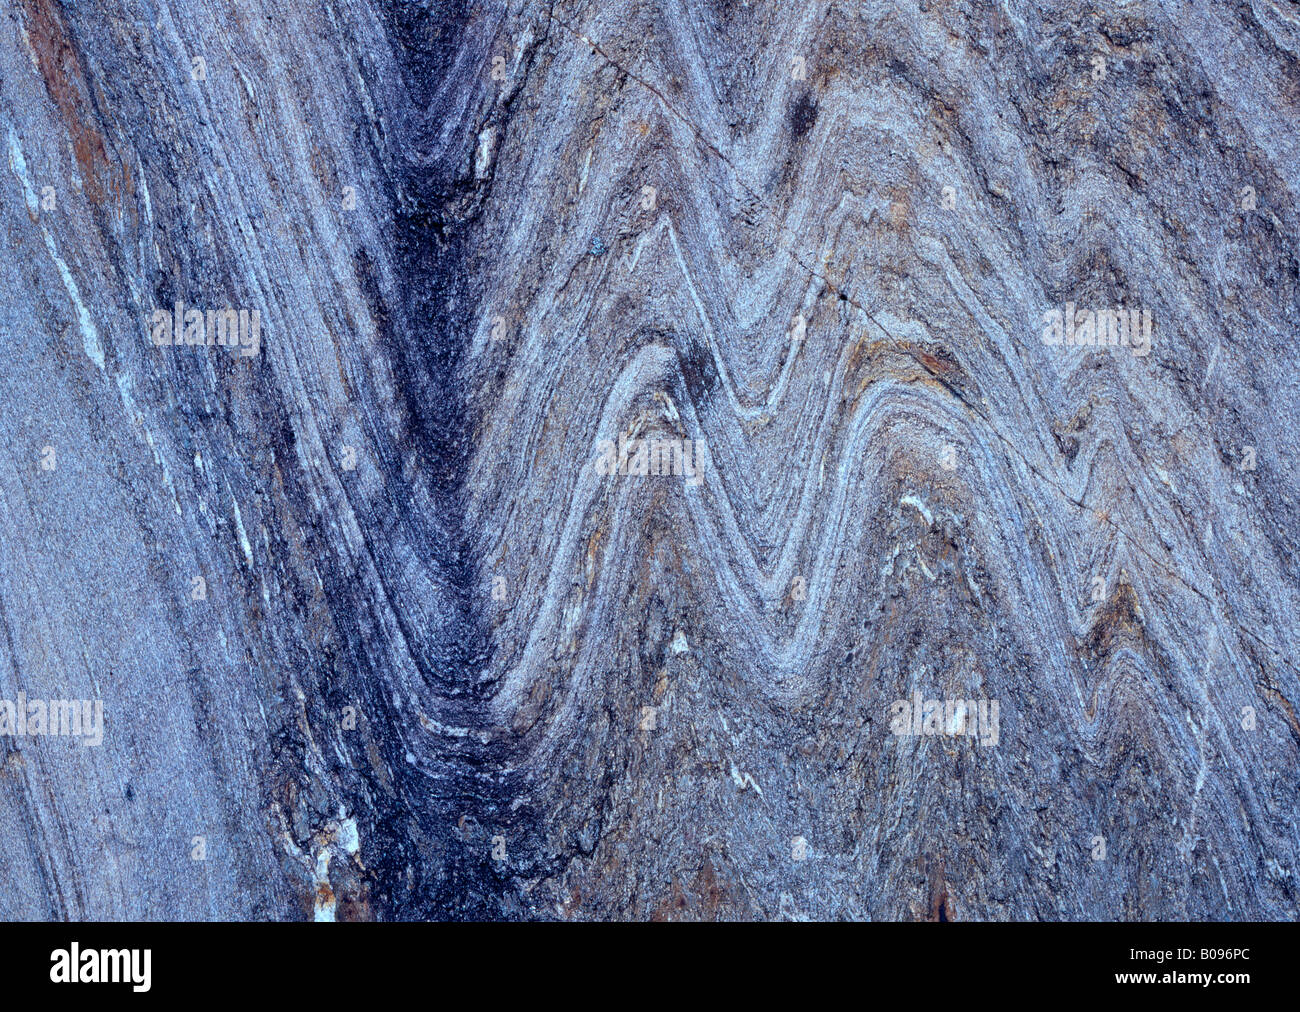 Textured, layered rock surface, Tirol, Austria Stock Photo